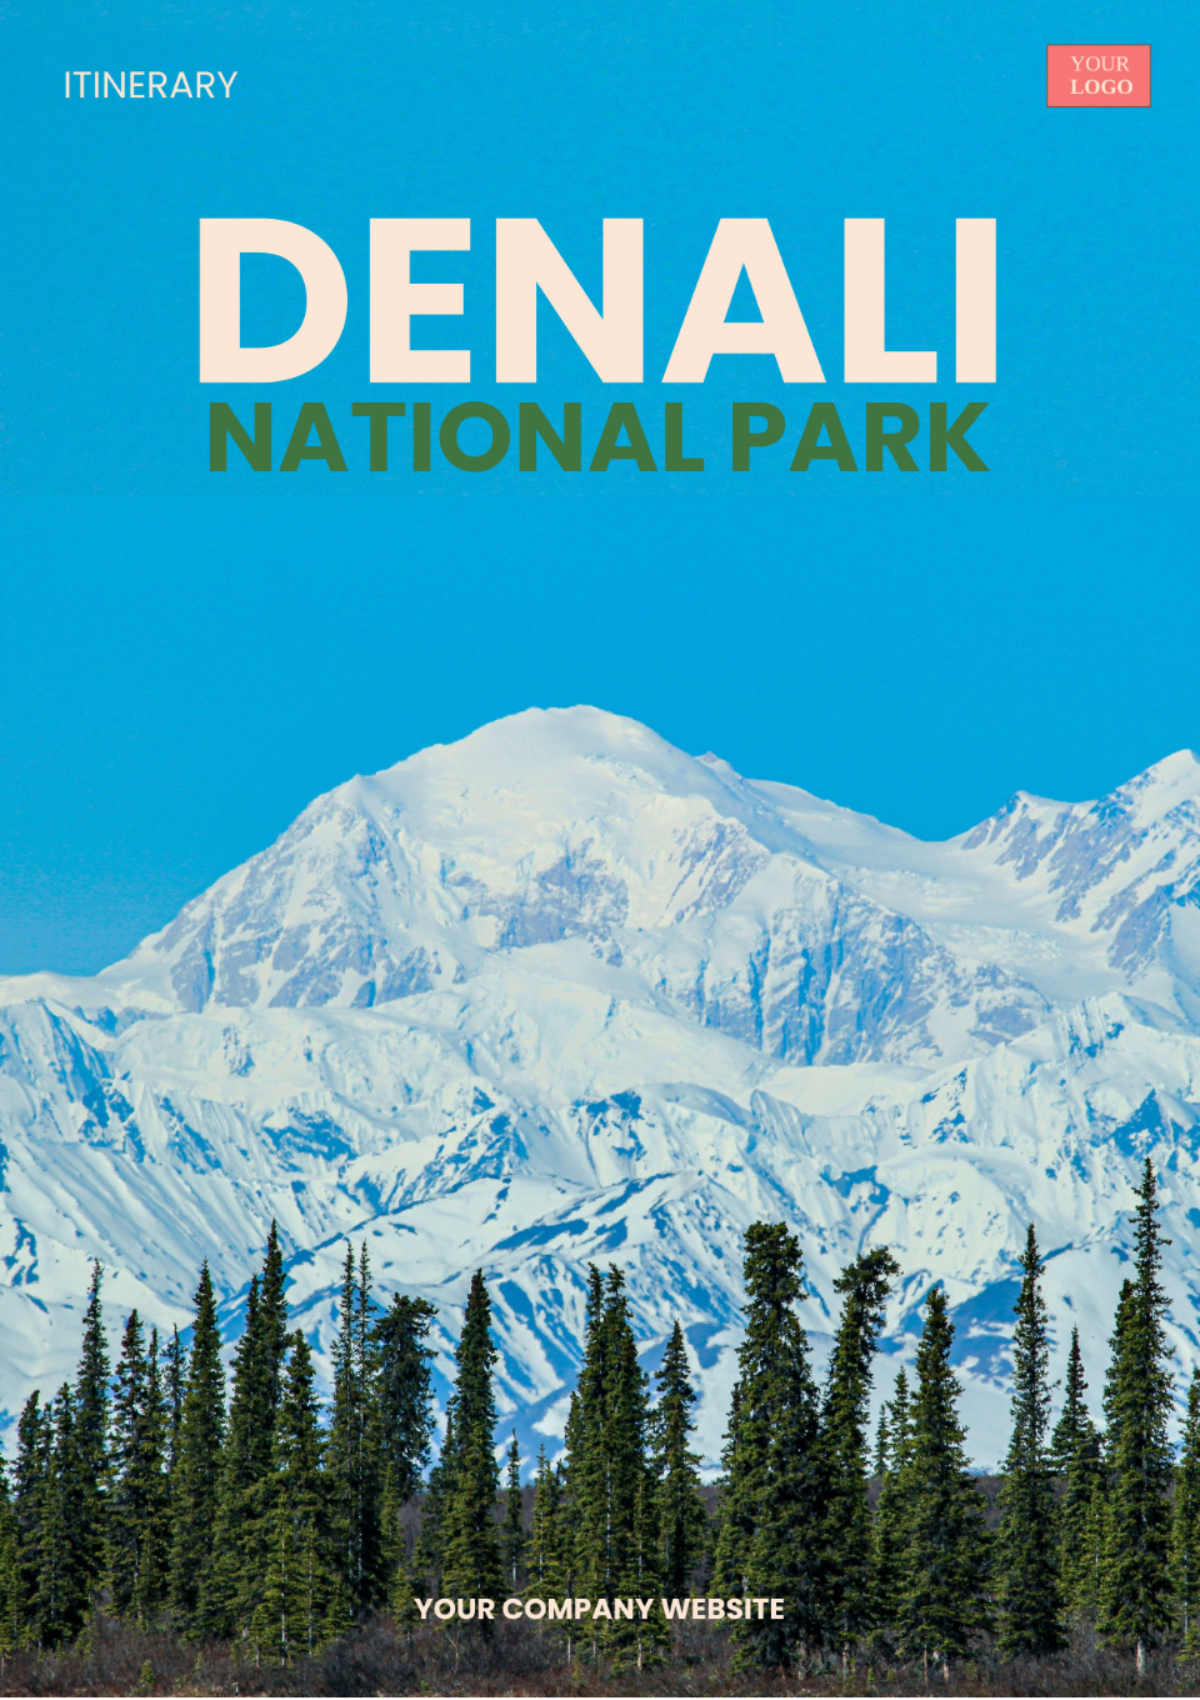 Denali National Park Itinerary Template